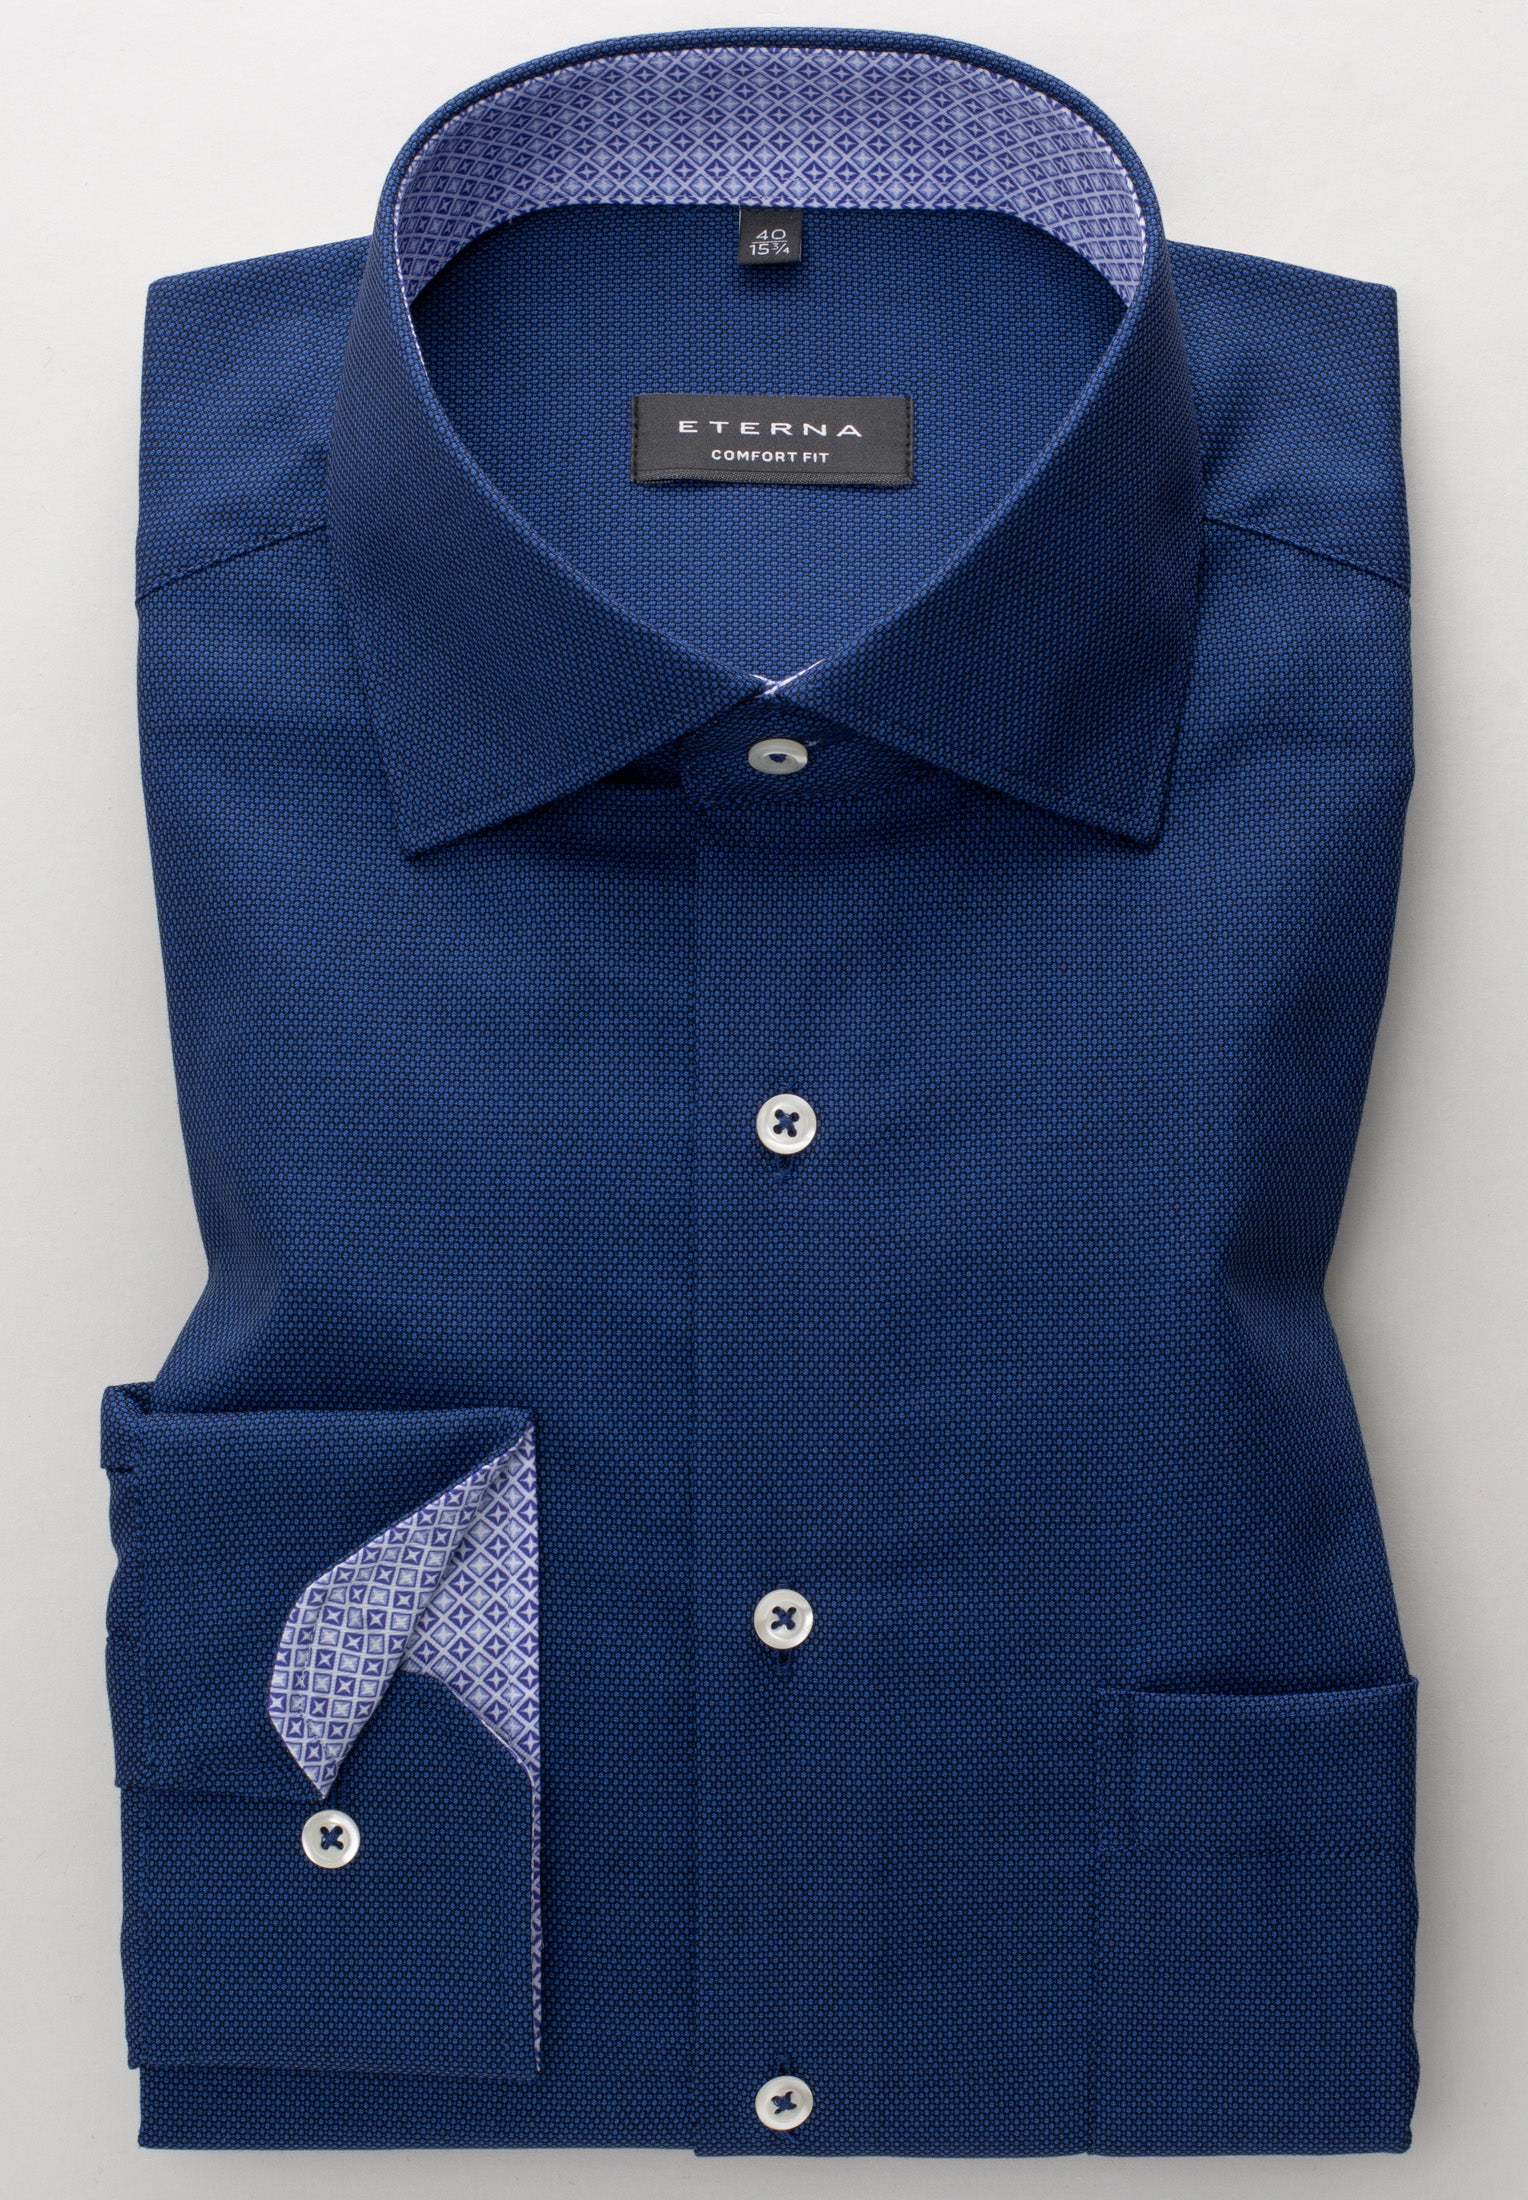 ETERNA Langarm Comfort – Lets Fashion! Patch F Hemd dunkelblau Struktur Haifischkragen